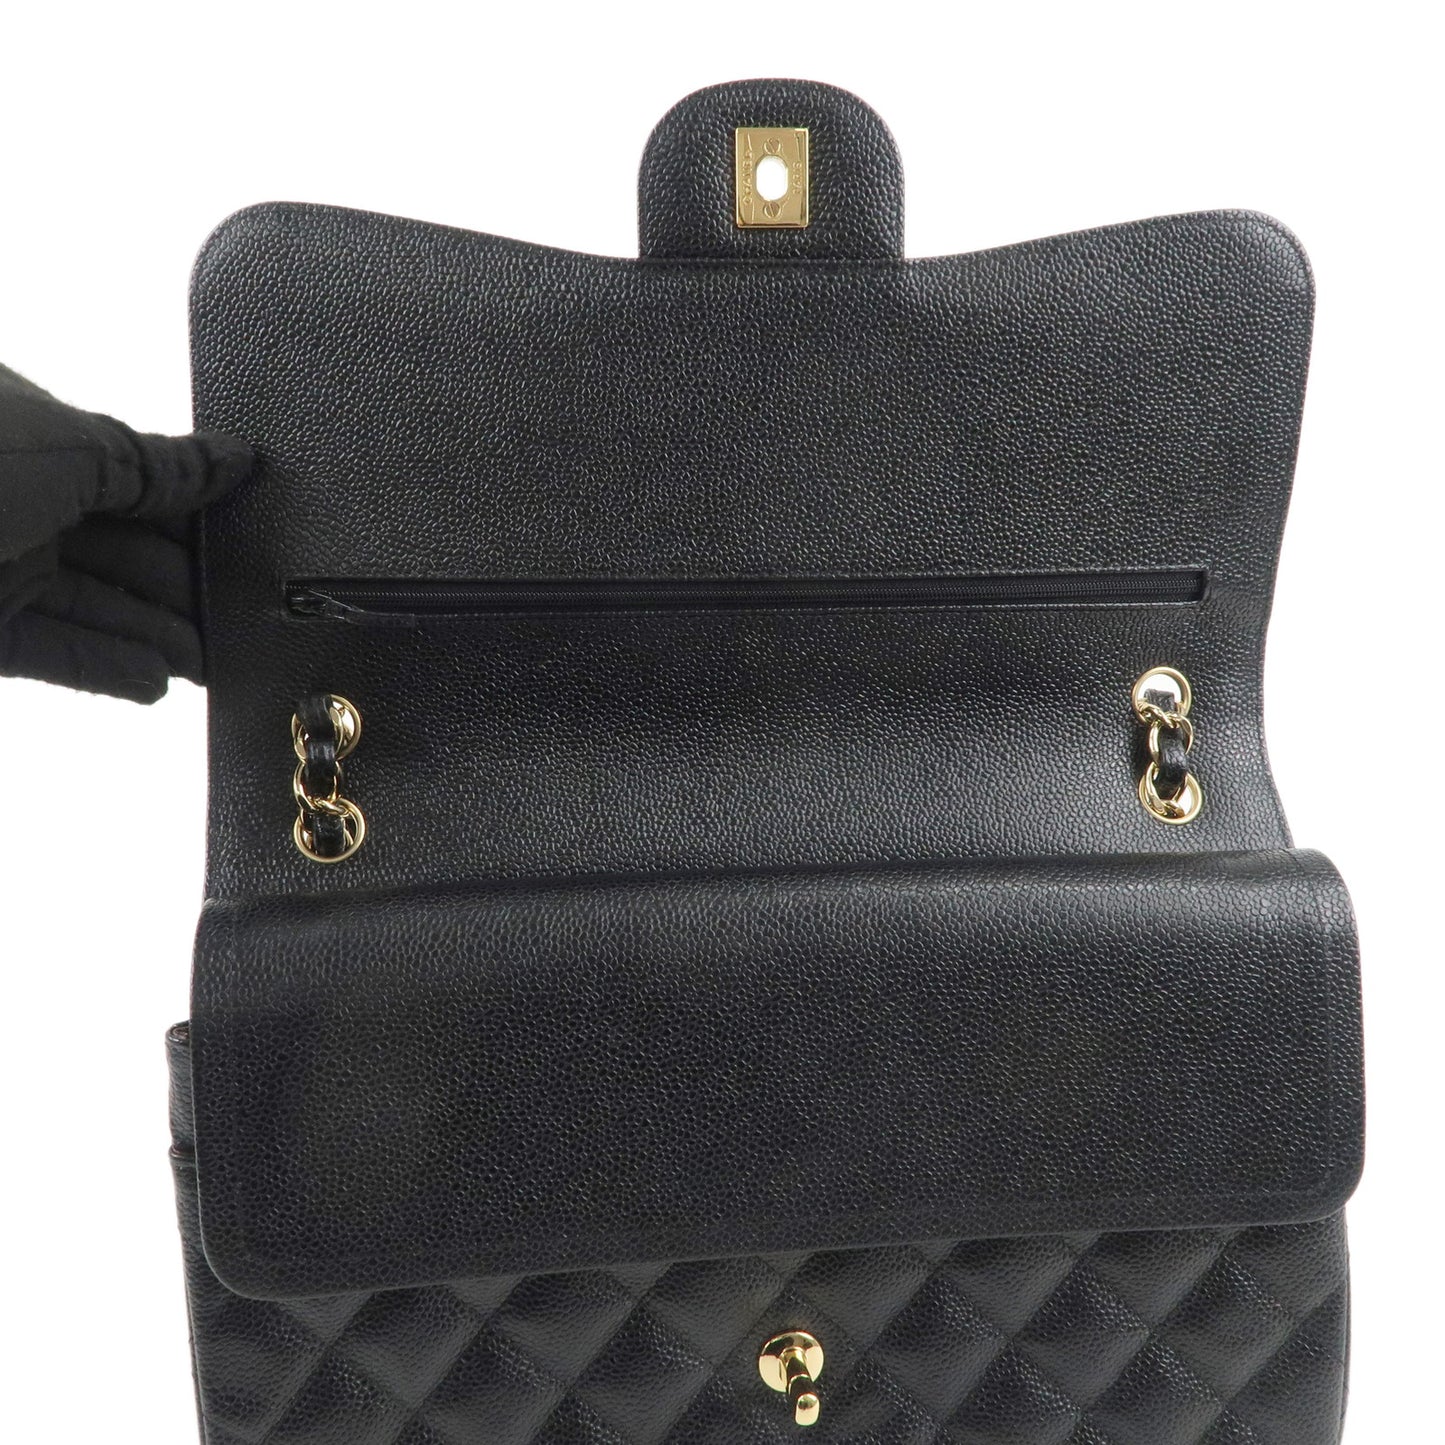 CHANEL Matelasse Caviar Skin Maxi 30 W Flap Shoulder Bag A58600